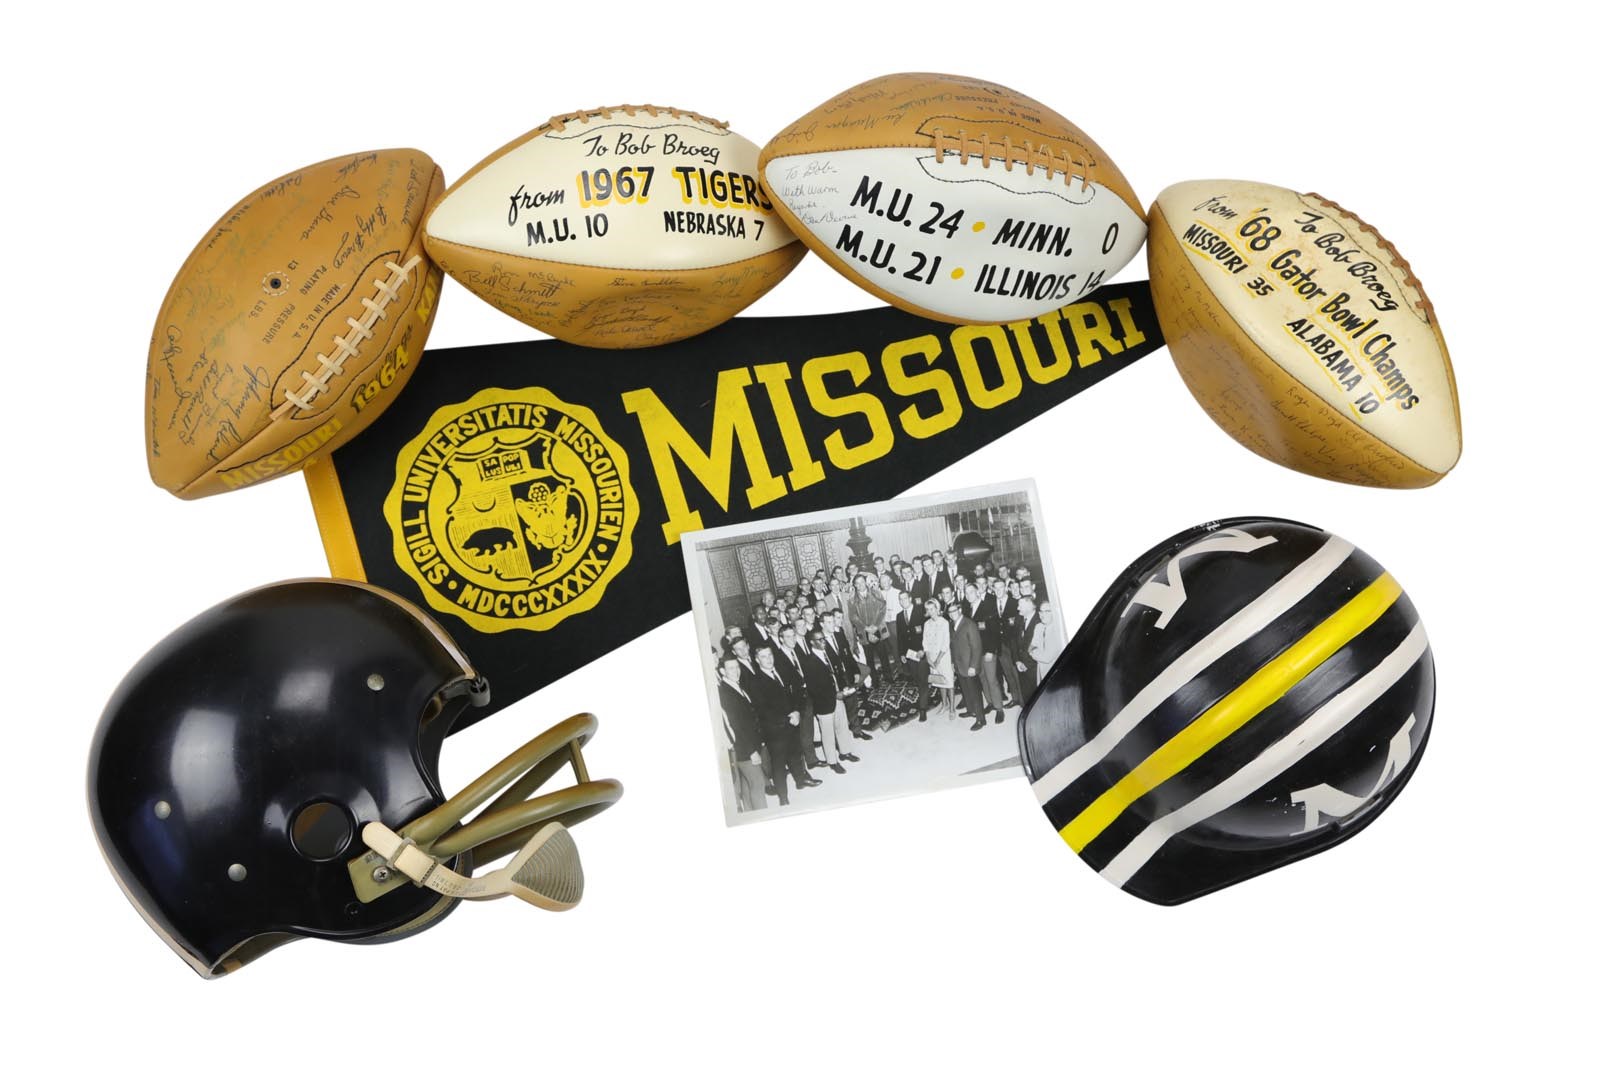 Football - 1960's U of Missouri Football Collection (8) From Sports Writer Bob Broeg